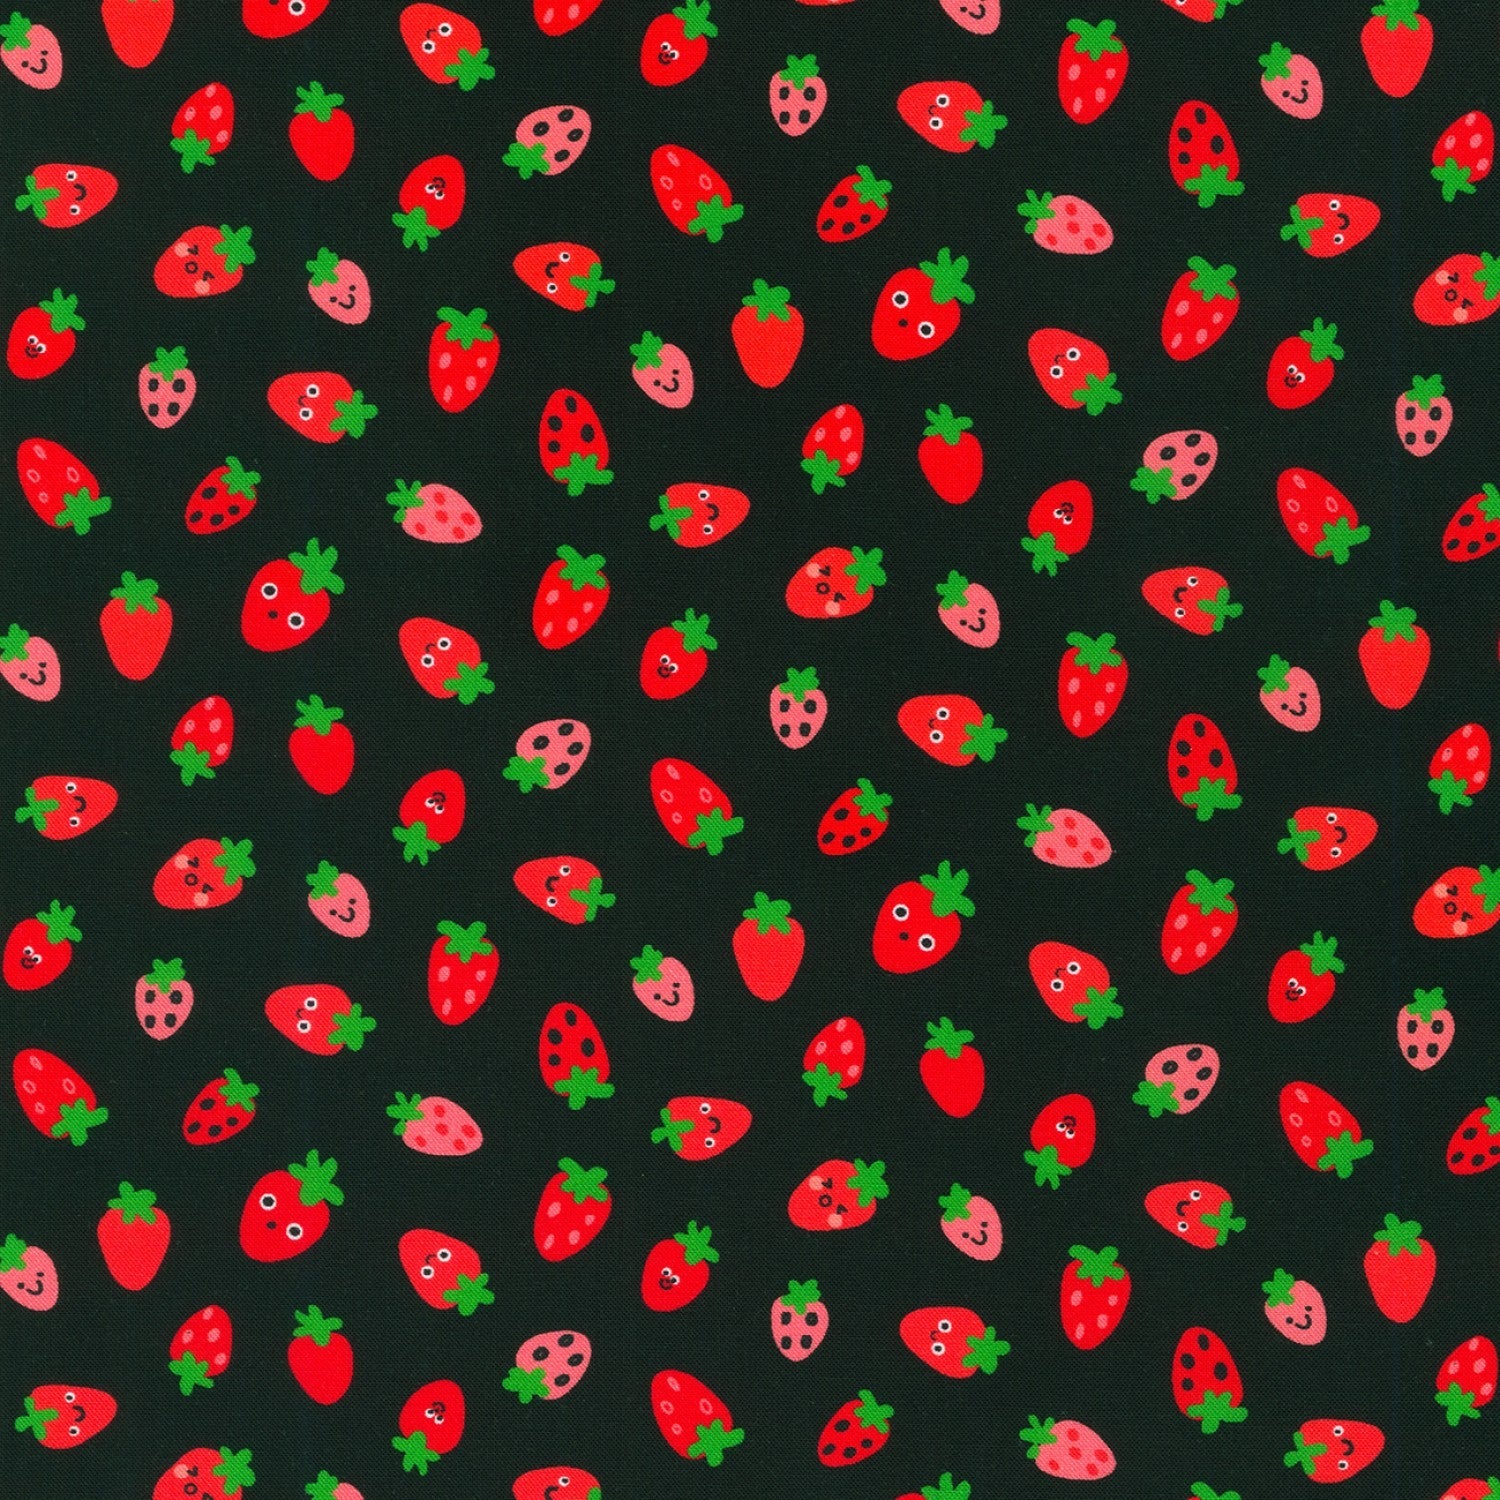 Farm to Table Strawberries Black ½ yd-Fabric-Spool of Thread